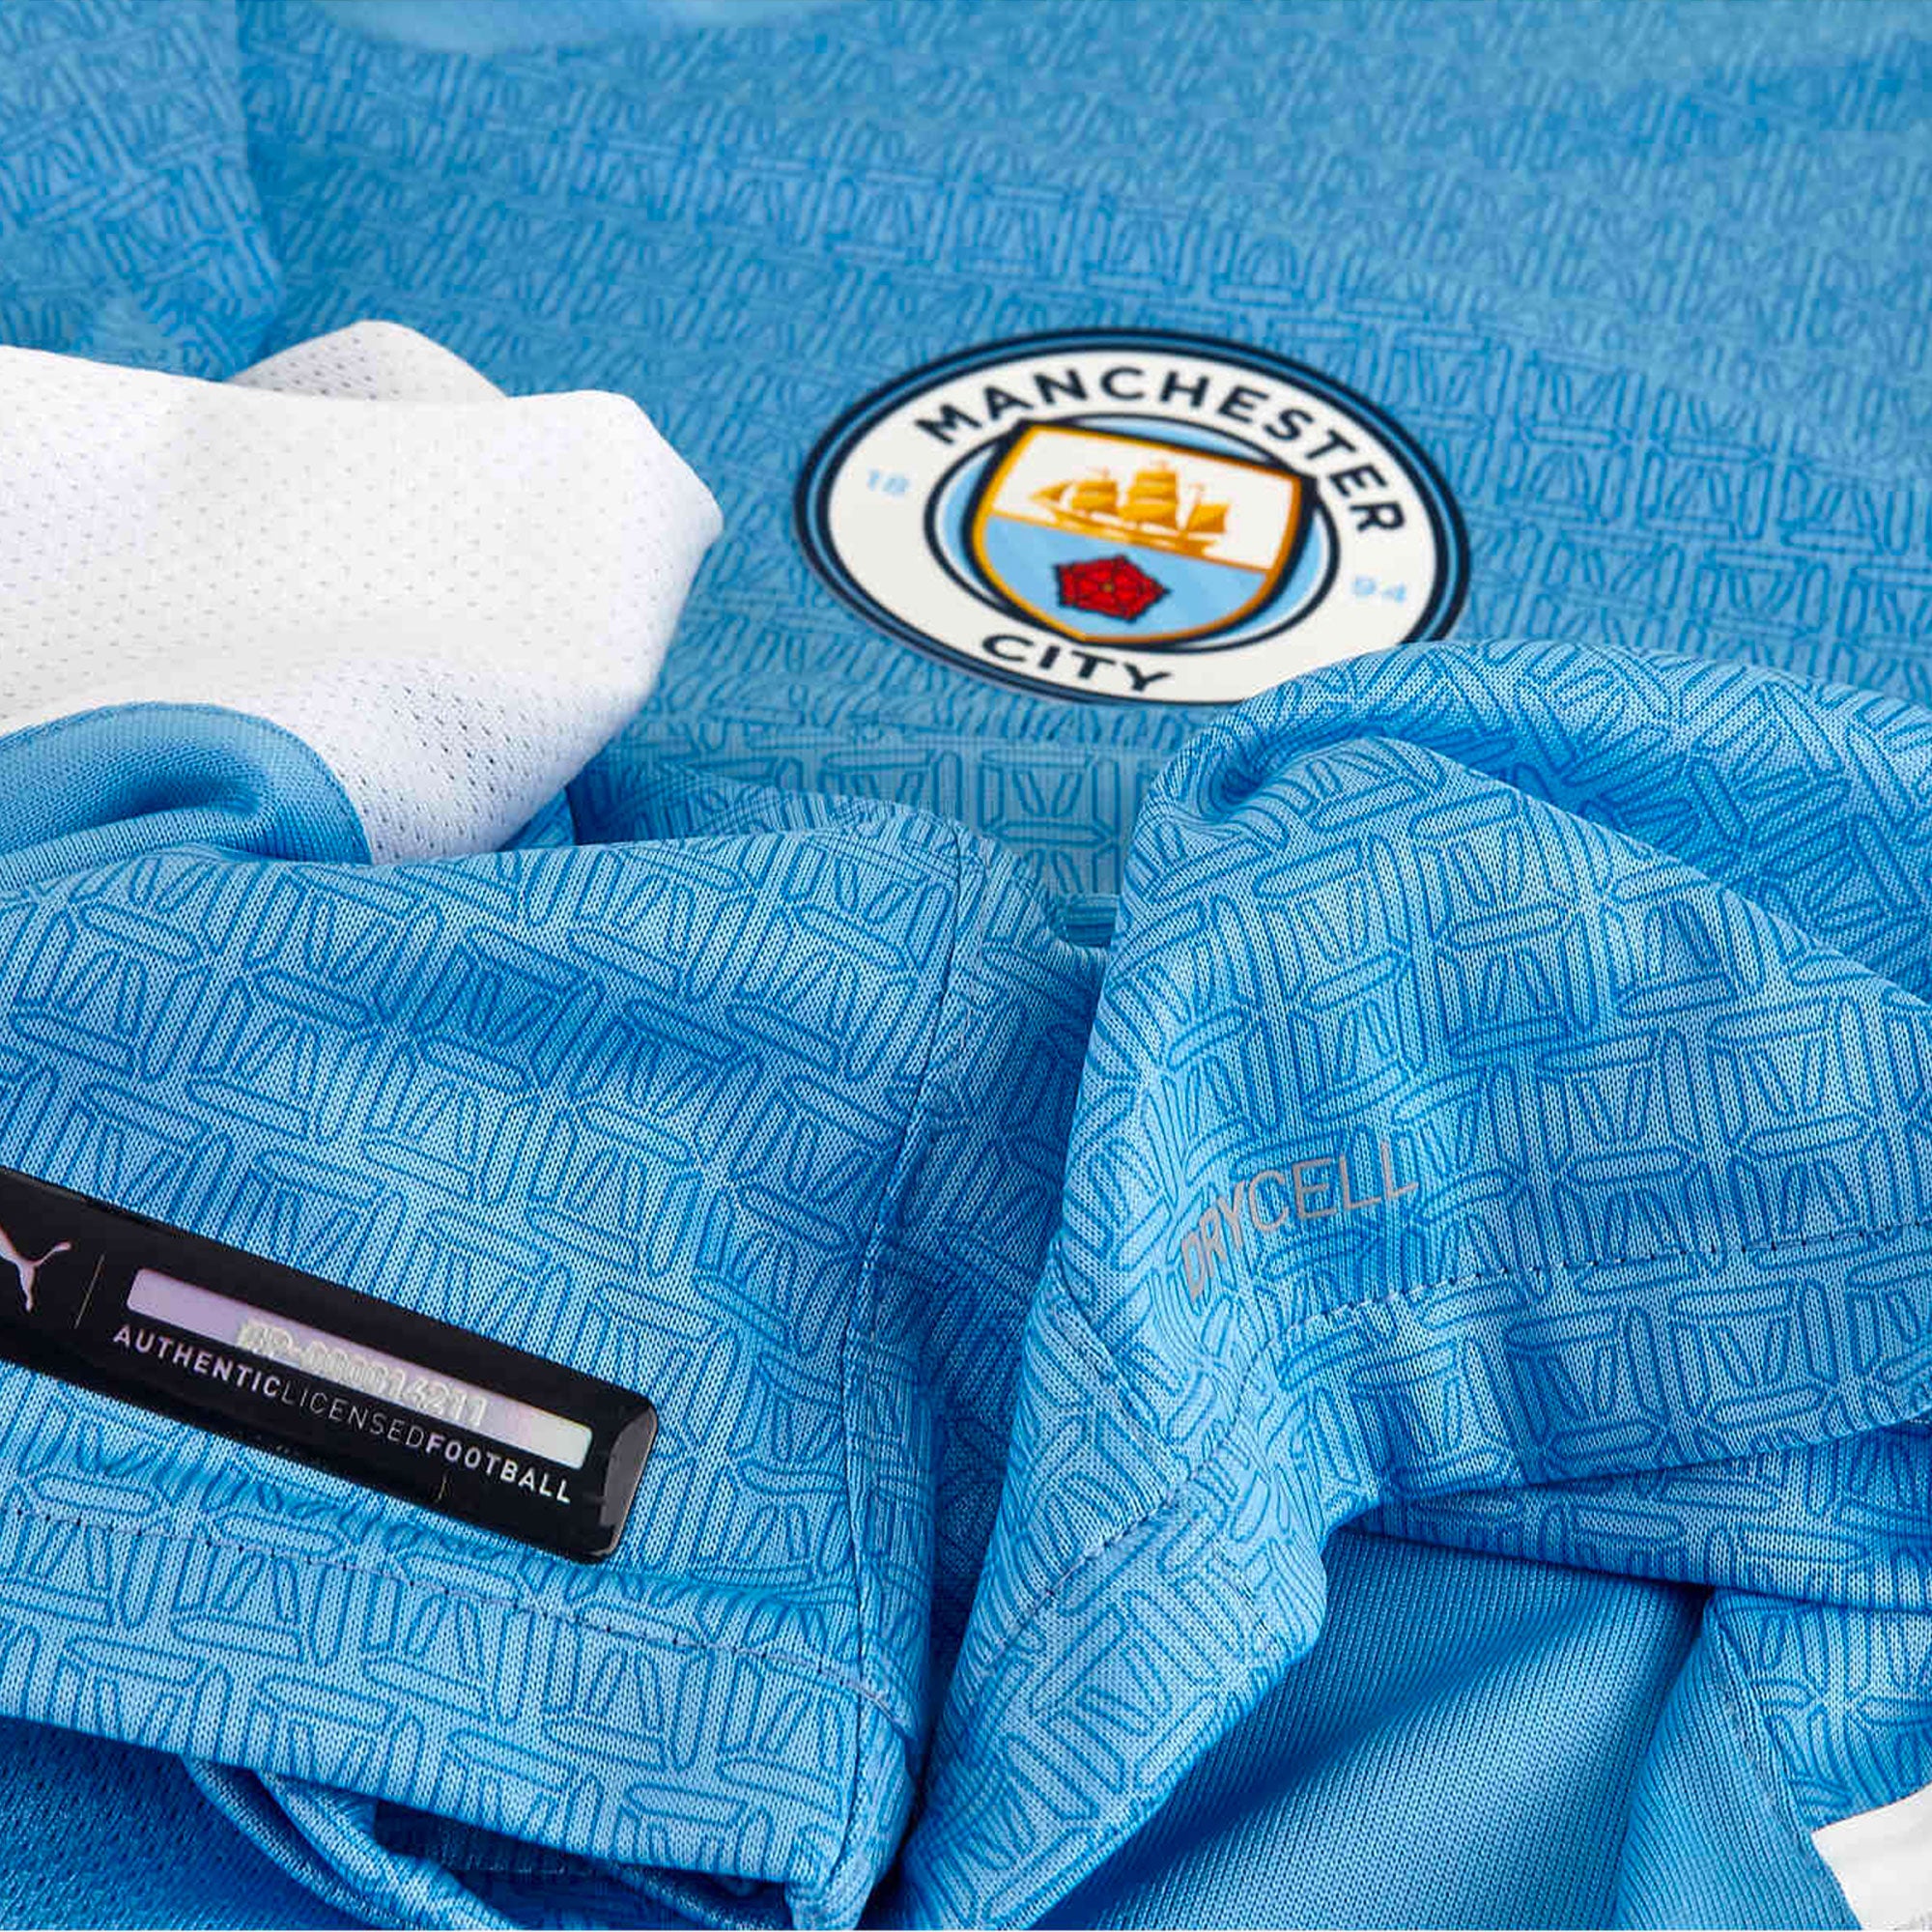 Puma Manchester City Authentic Home Shirt 2020-21 Jersey Blue